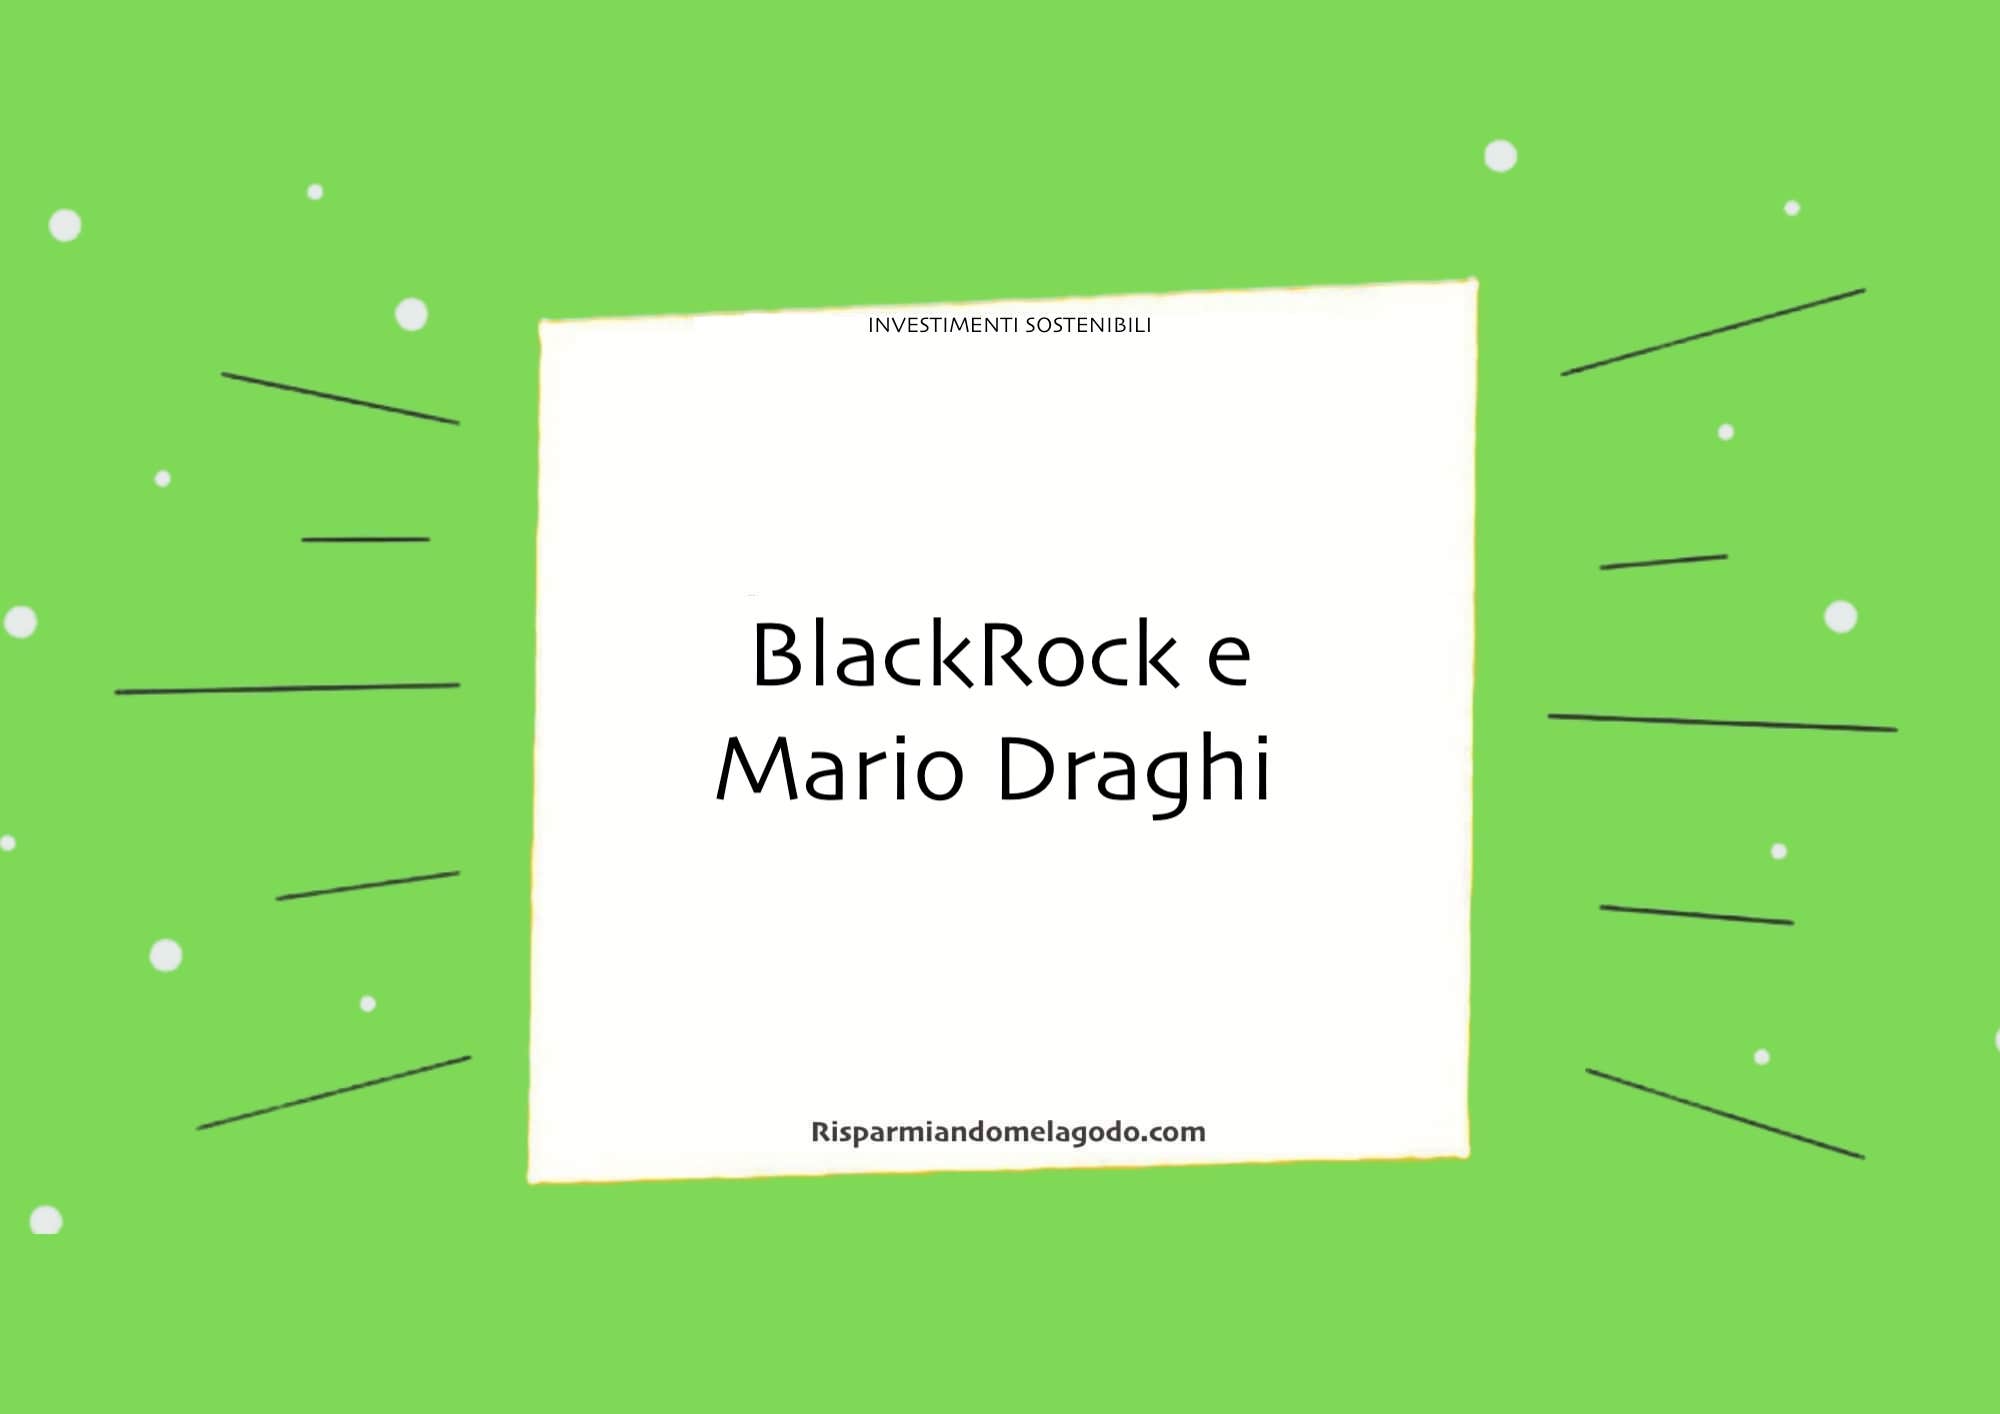 BlackRock e Mario Draghi